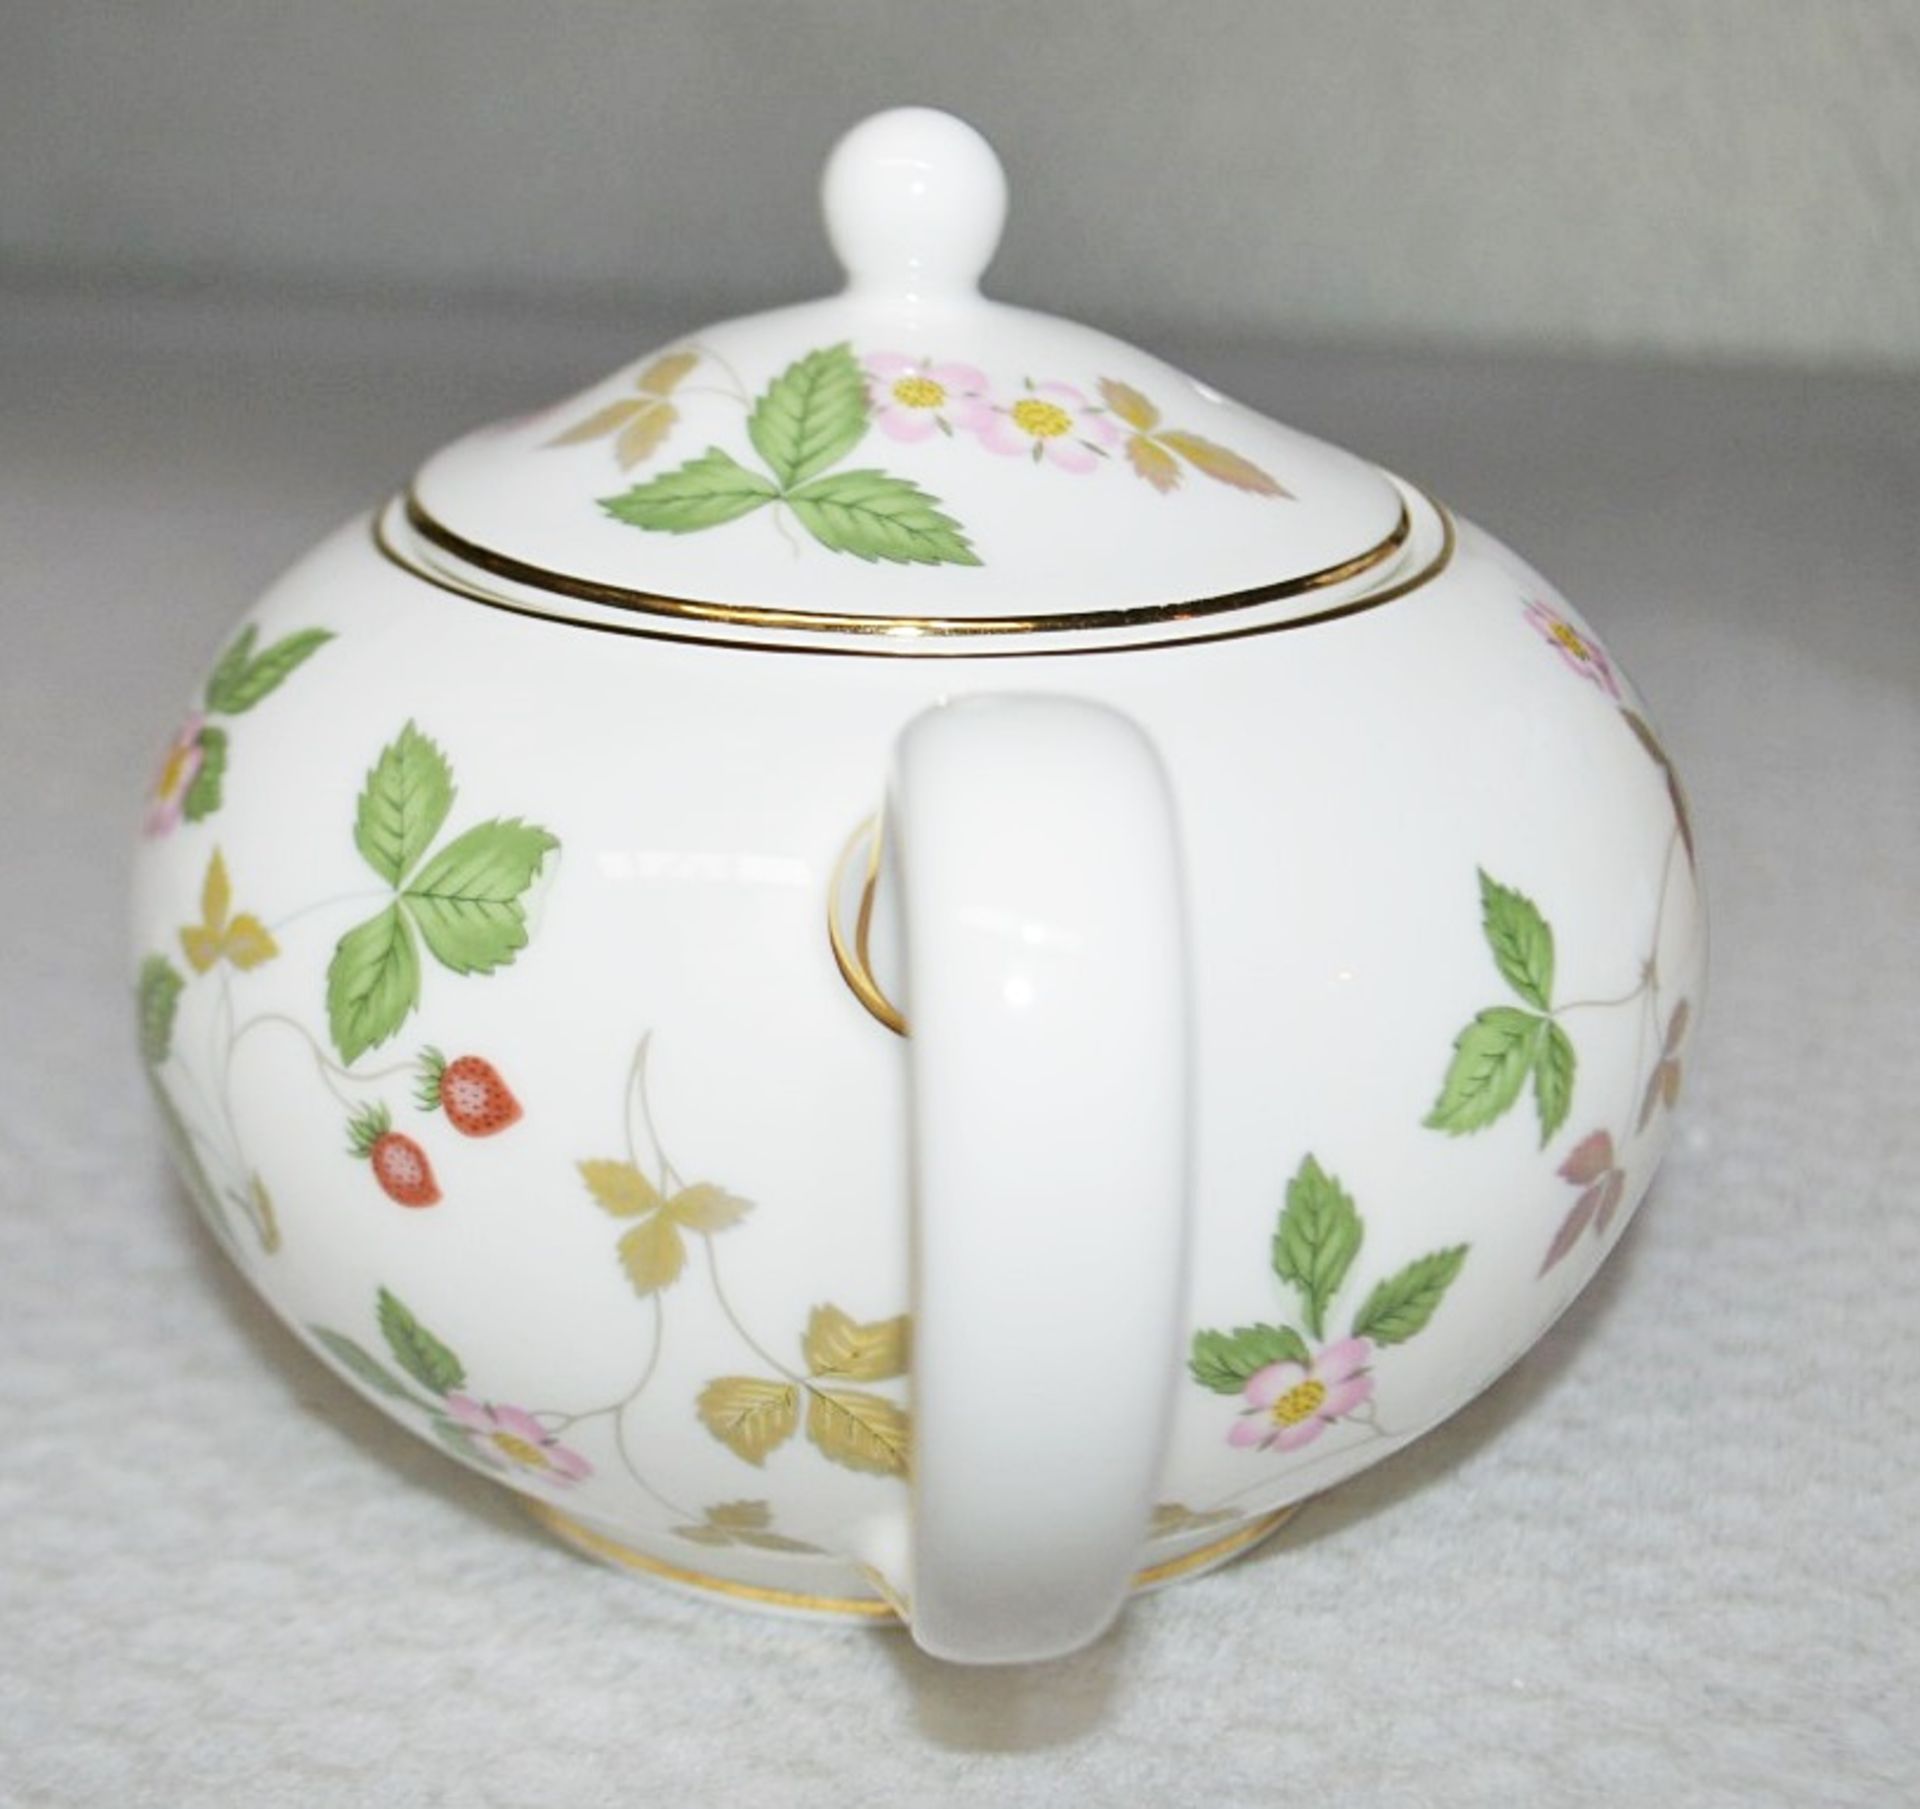 1 x WEDGWOOD Small Wild Strawberry Teapot Featuring A 22-Karat Gold Rim - Read Full Description - Image 3 of 8